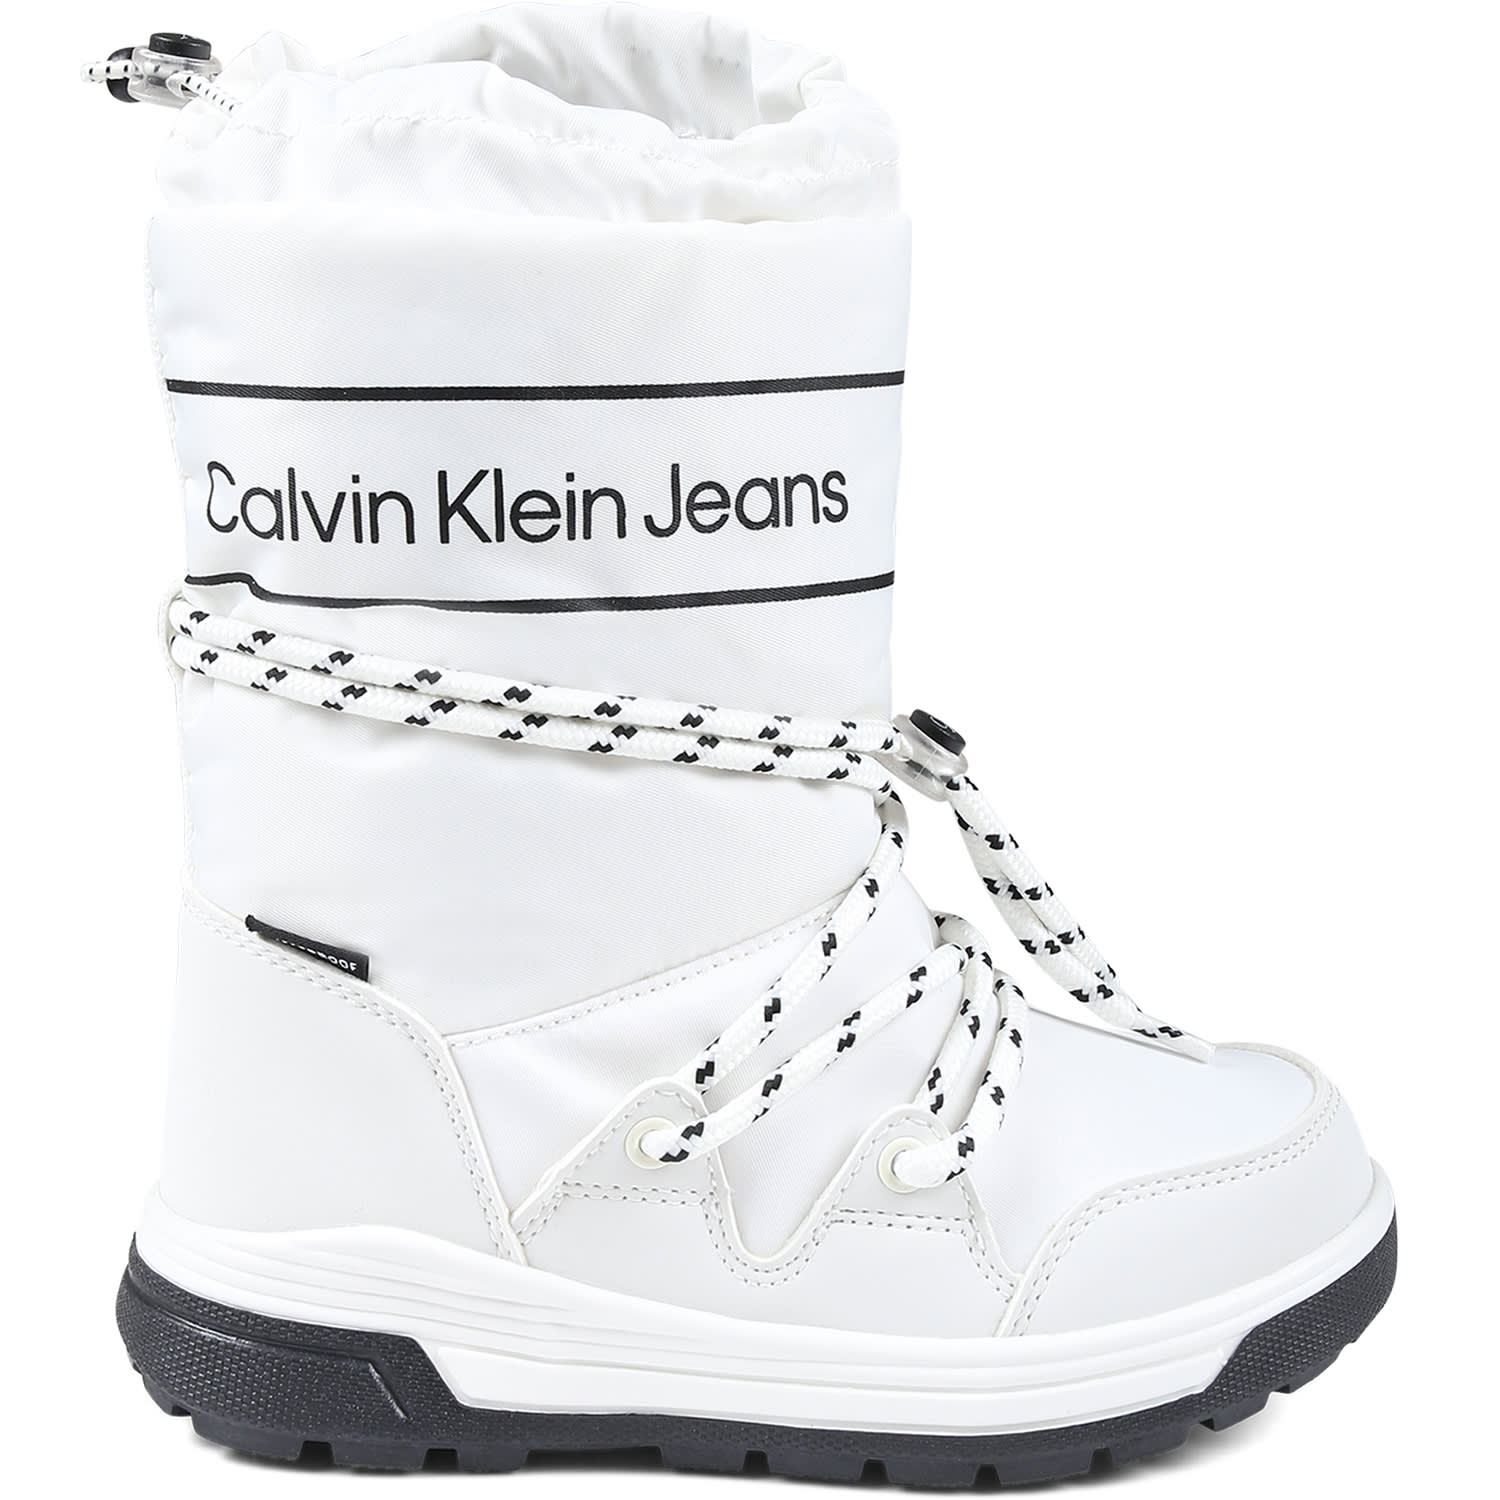 CALVIN KLEIN WHITE SNOW BOOTS FOR GIRL WITH LOGO